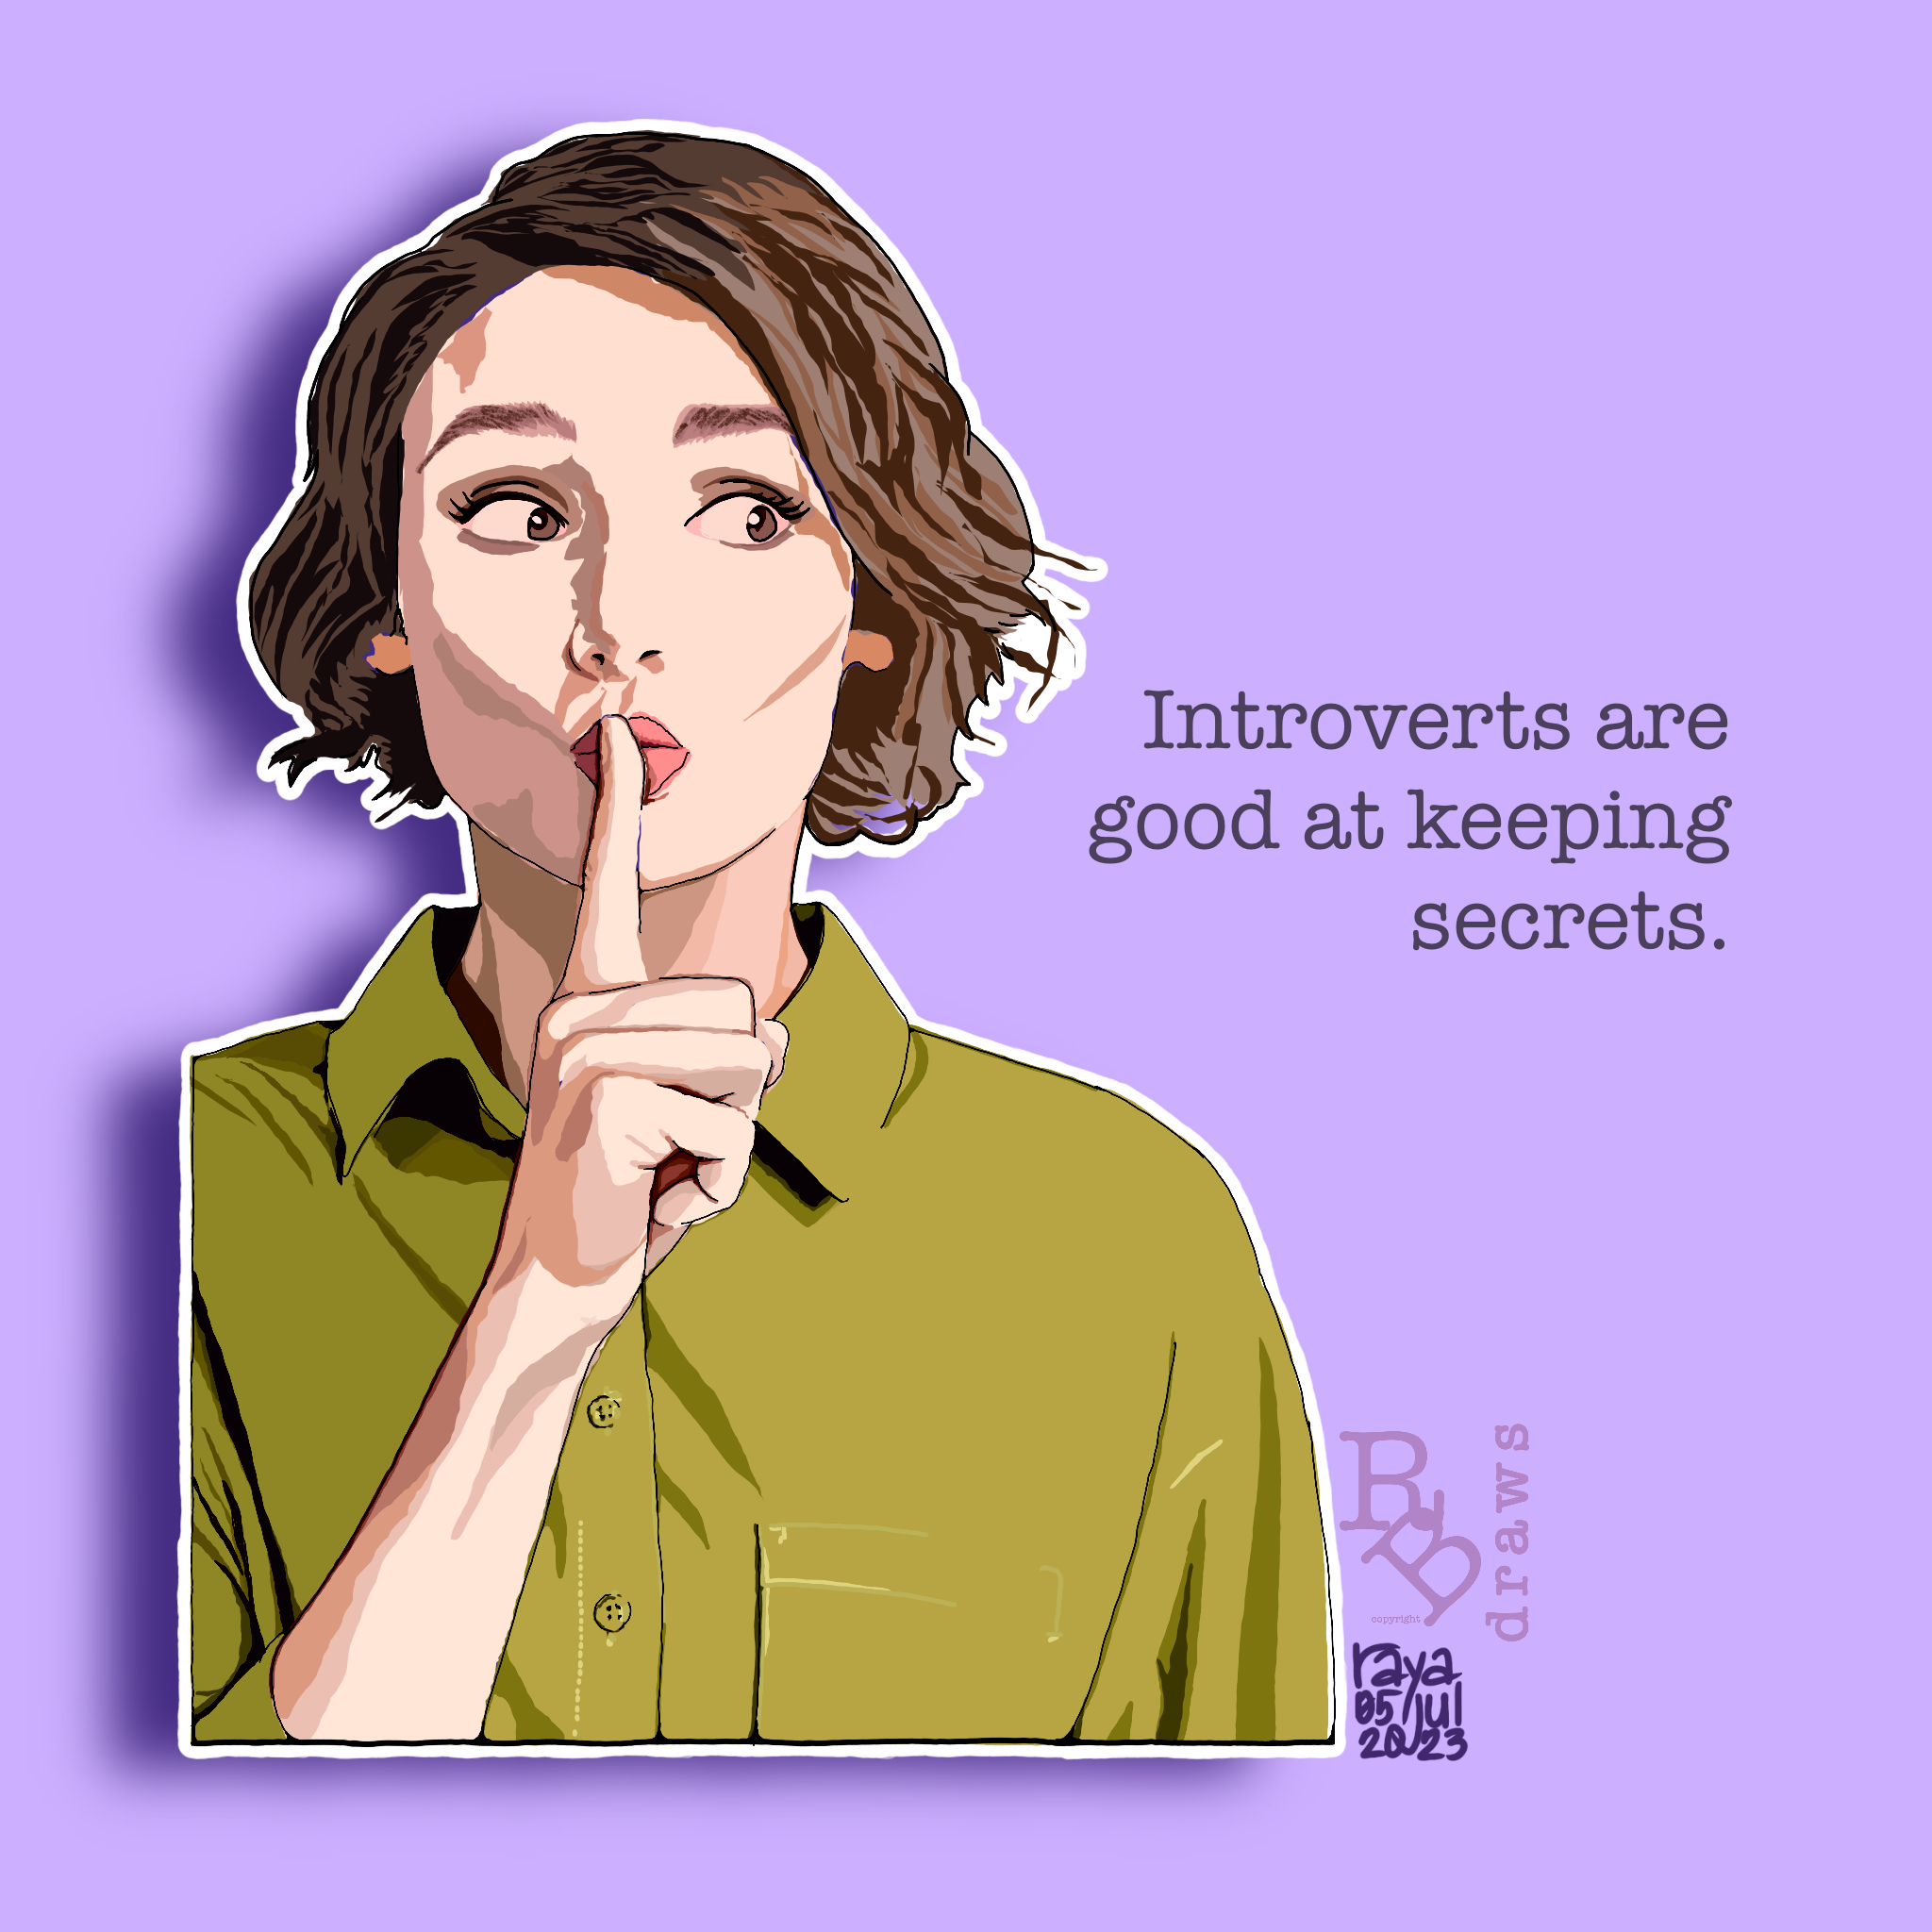 Introverts keep secrets!